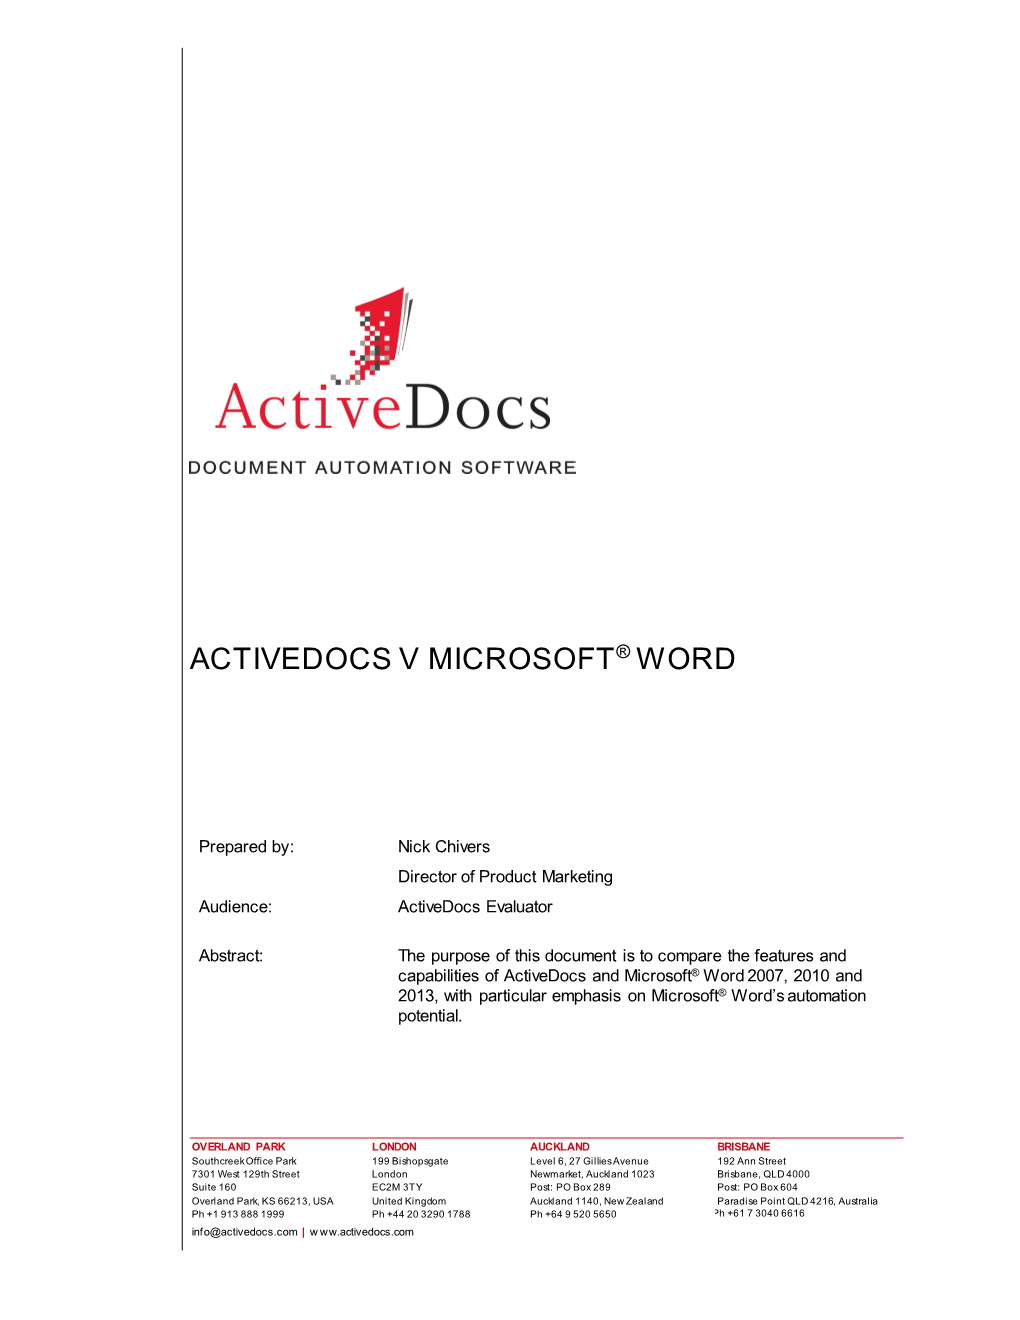 Activedocs V Microsoft® Word